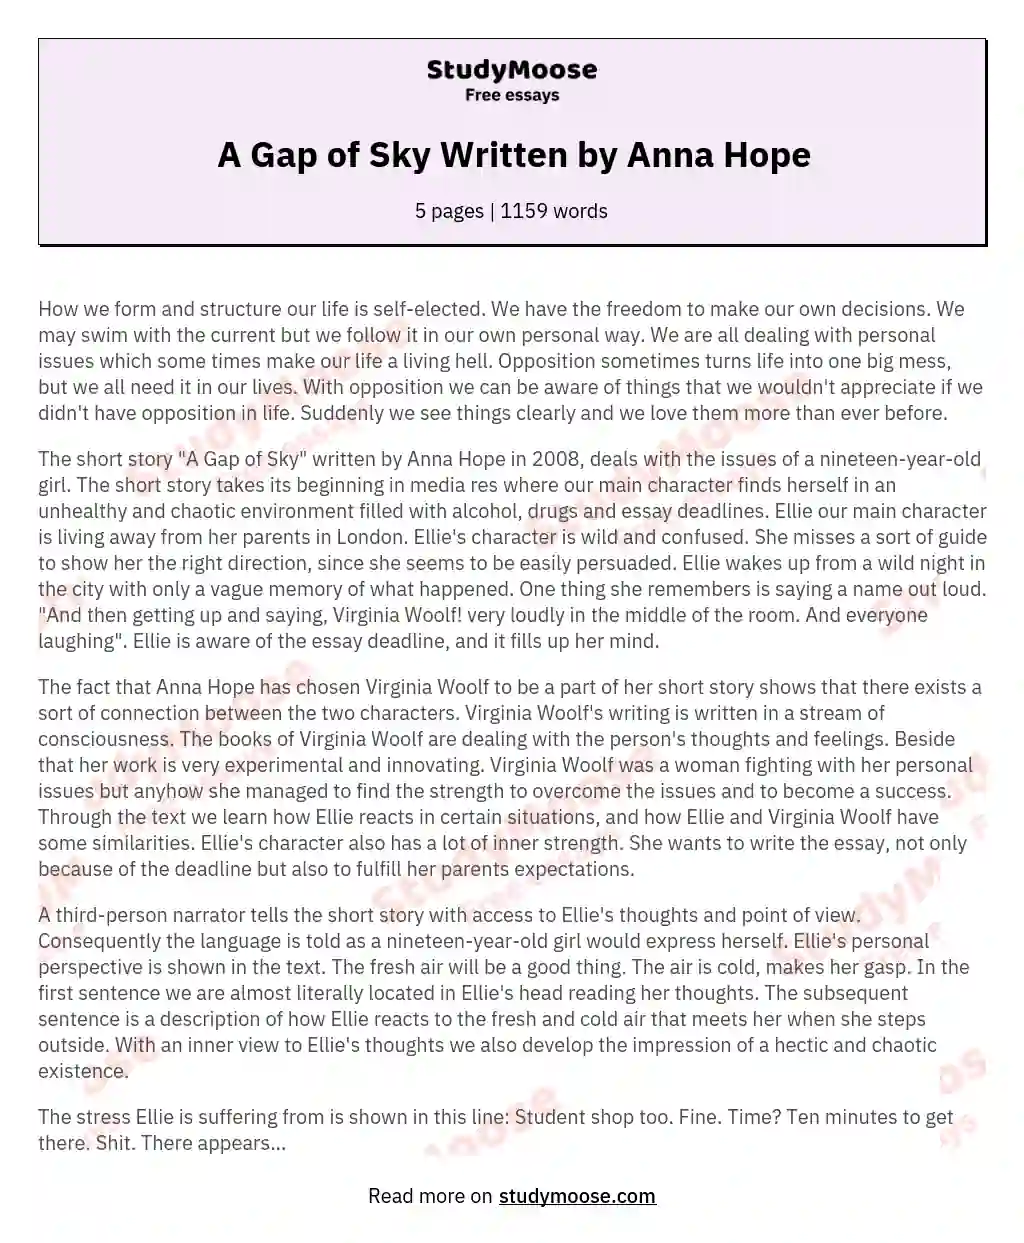 A Gap of Sky Written by Anna Hope essay